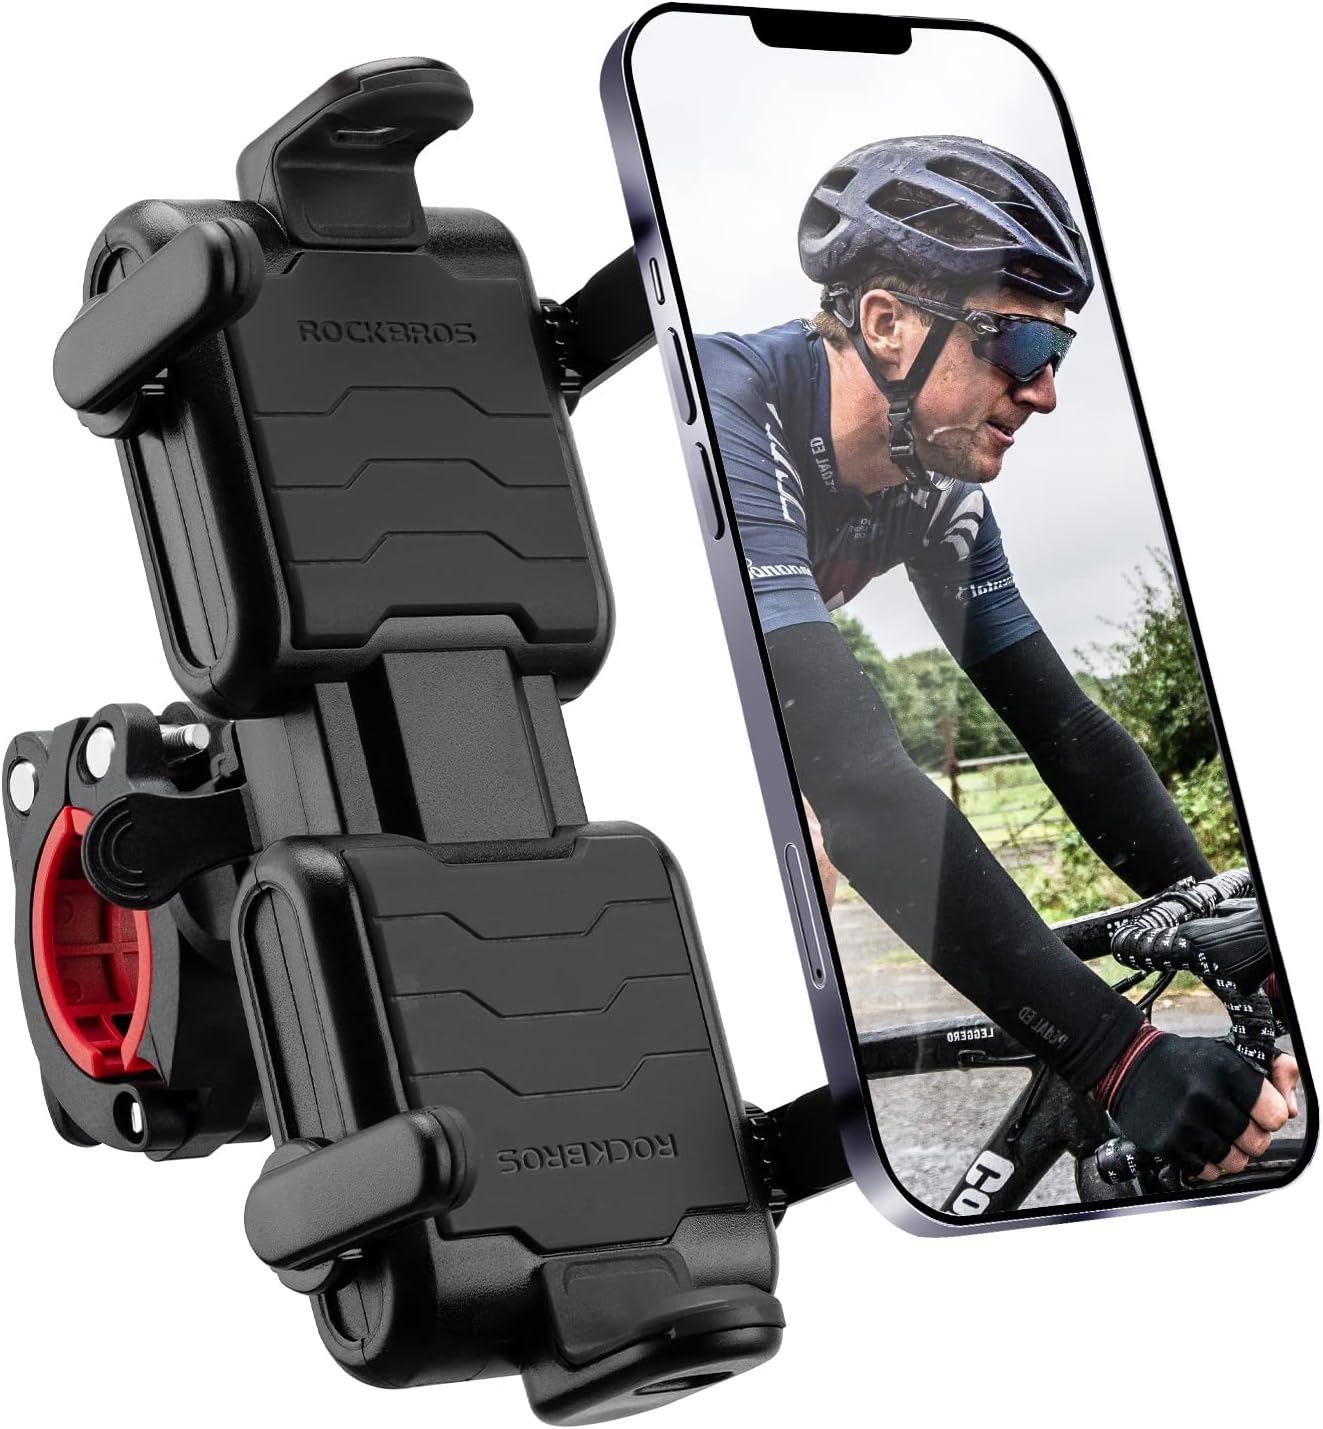 ROCKBROS Bike Phone Holder- Adjustable Motorcycle Phone Mount Handlebar Clip, Black